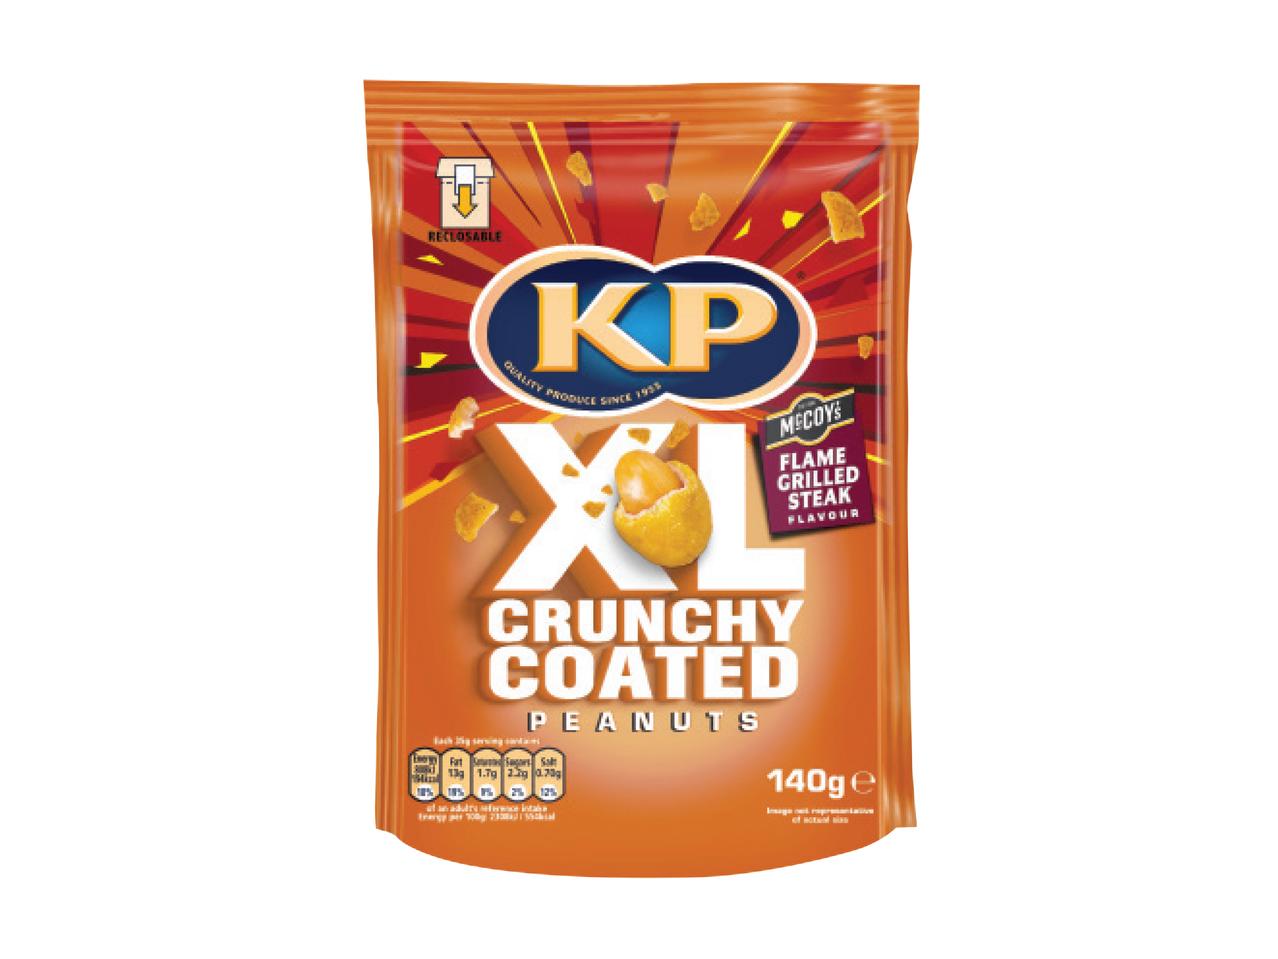 KP XL Crunchy Peanuts - Flame Grilled Steak